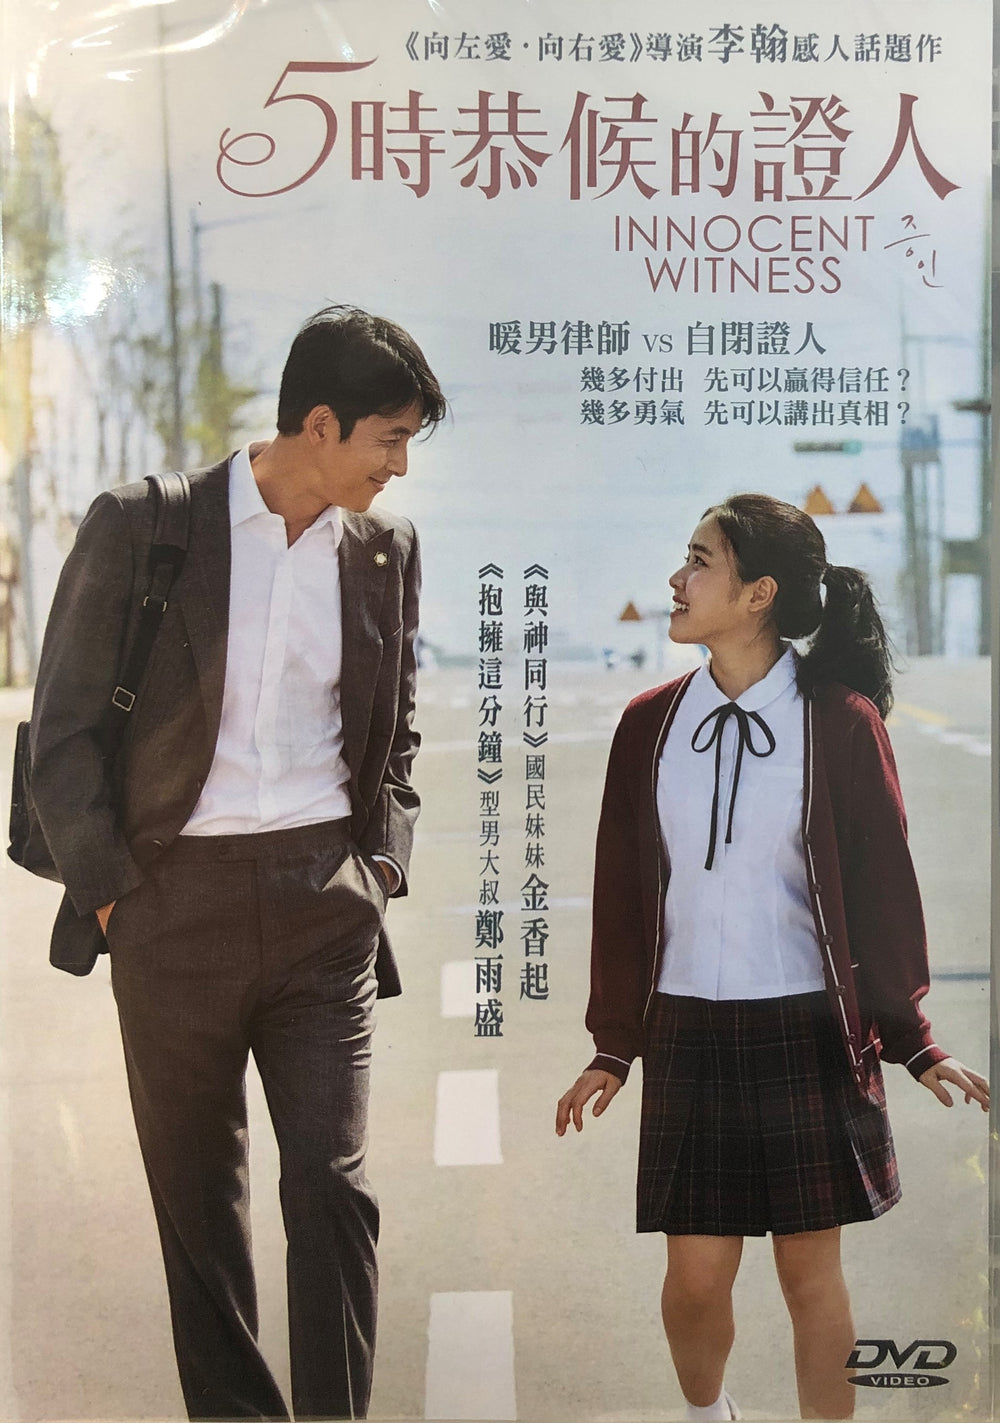 Innocent Witness 2019 (Korean Movie) DVD with English Subtitles (Region 3) 5時恭候的證人